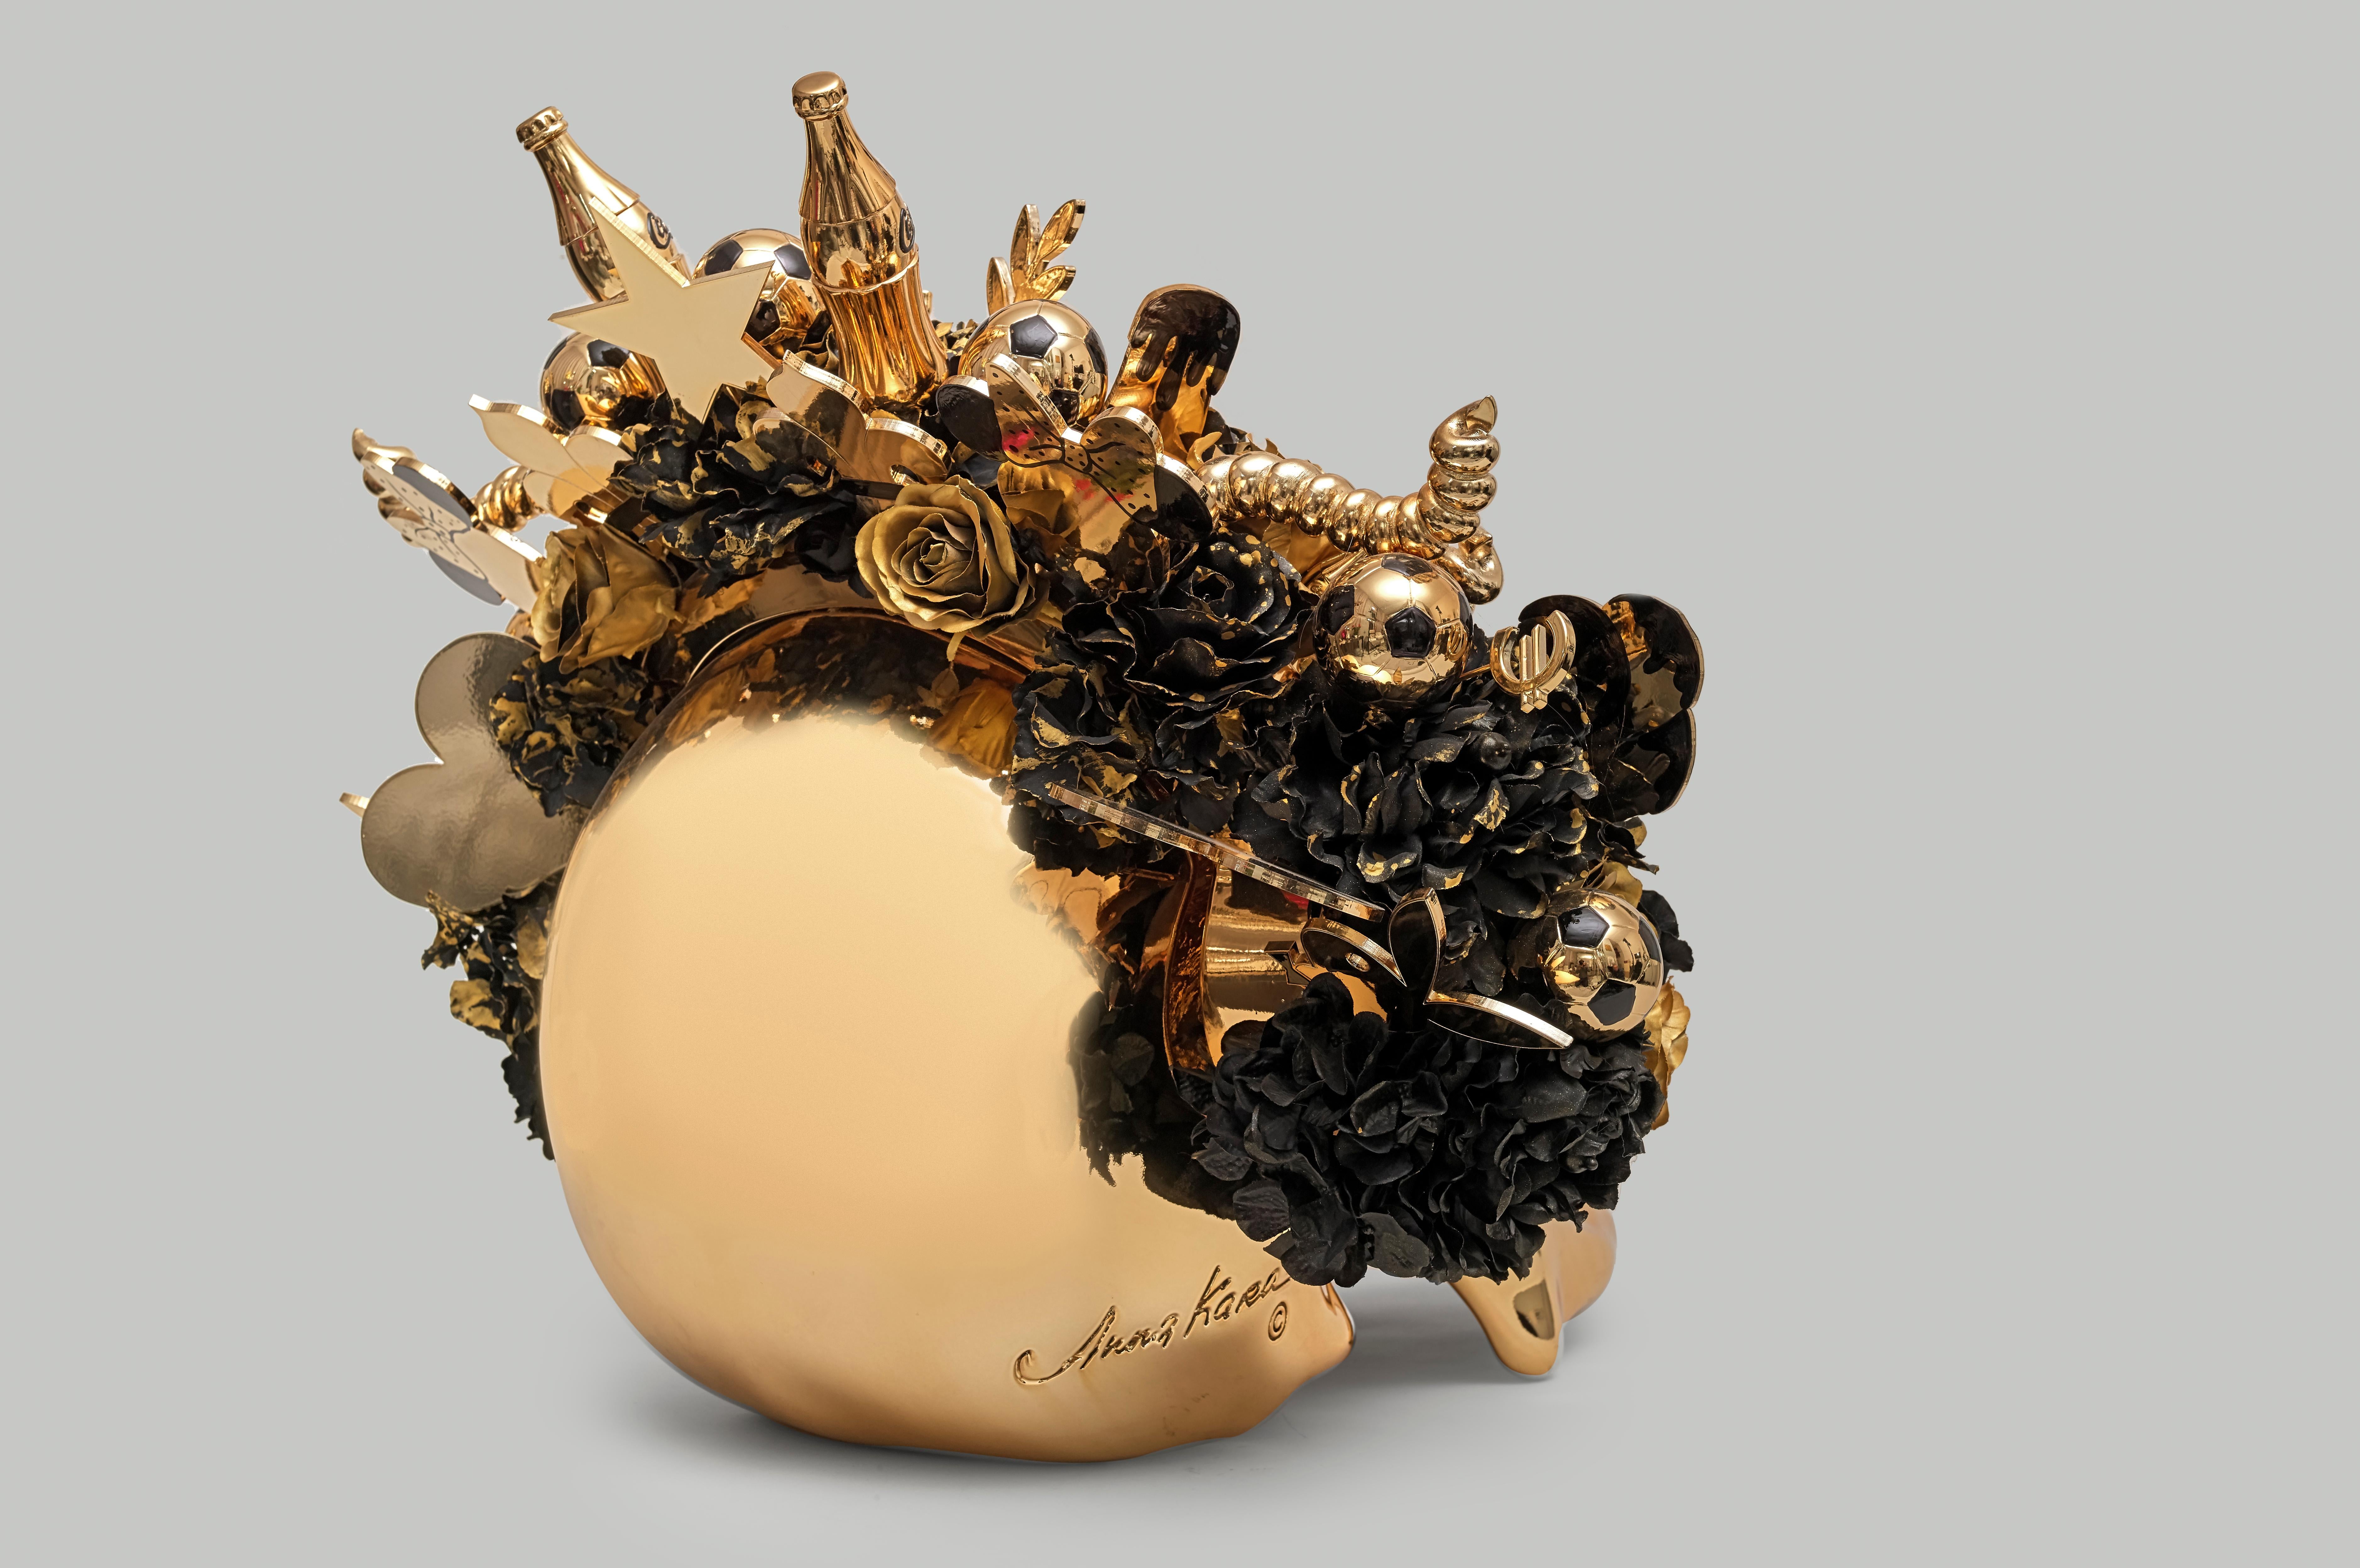 ANNA KARA - La jeunesse dorée  - Conceptual Sculpture by Anna Kara